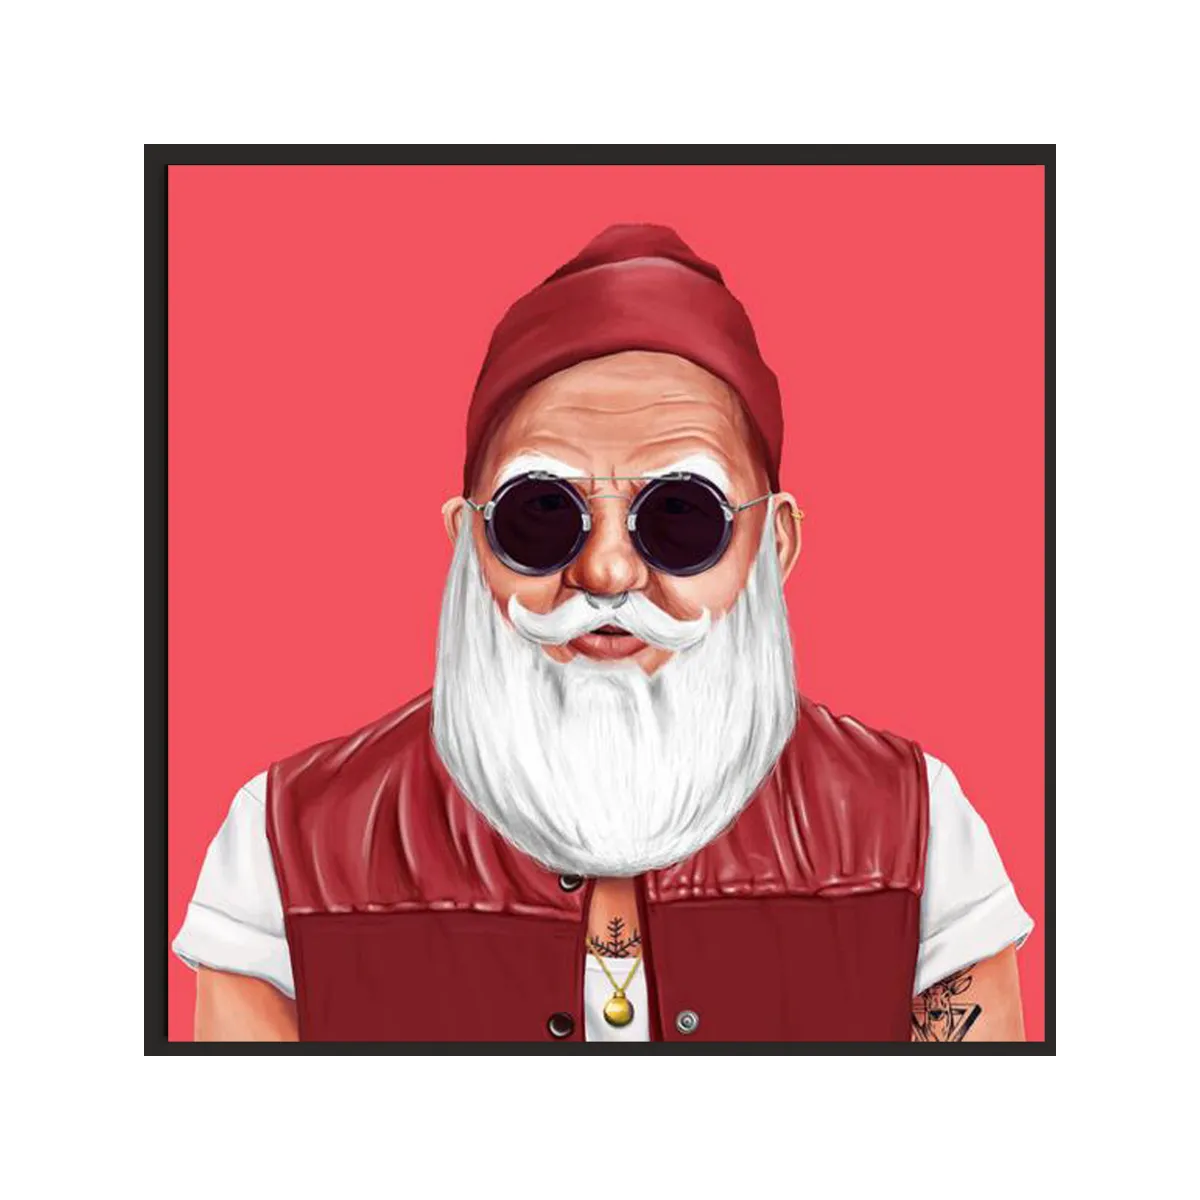 The Hipstory Art Print - Santa Claus als Hipster 5050cm